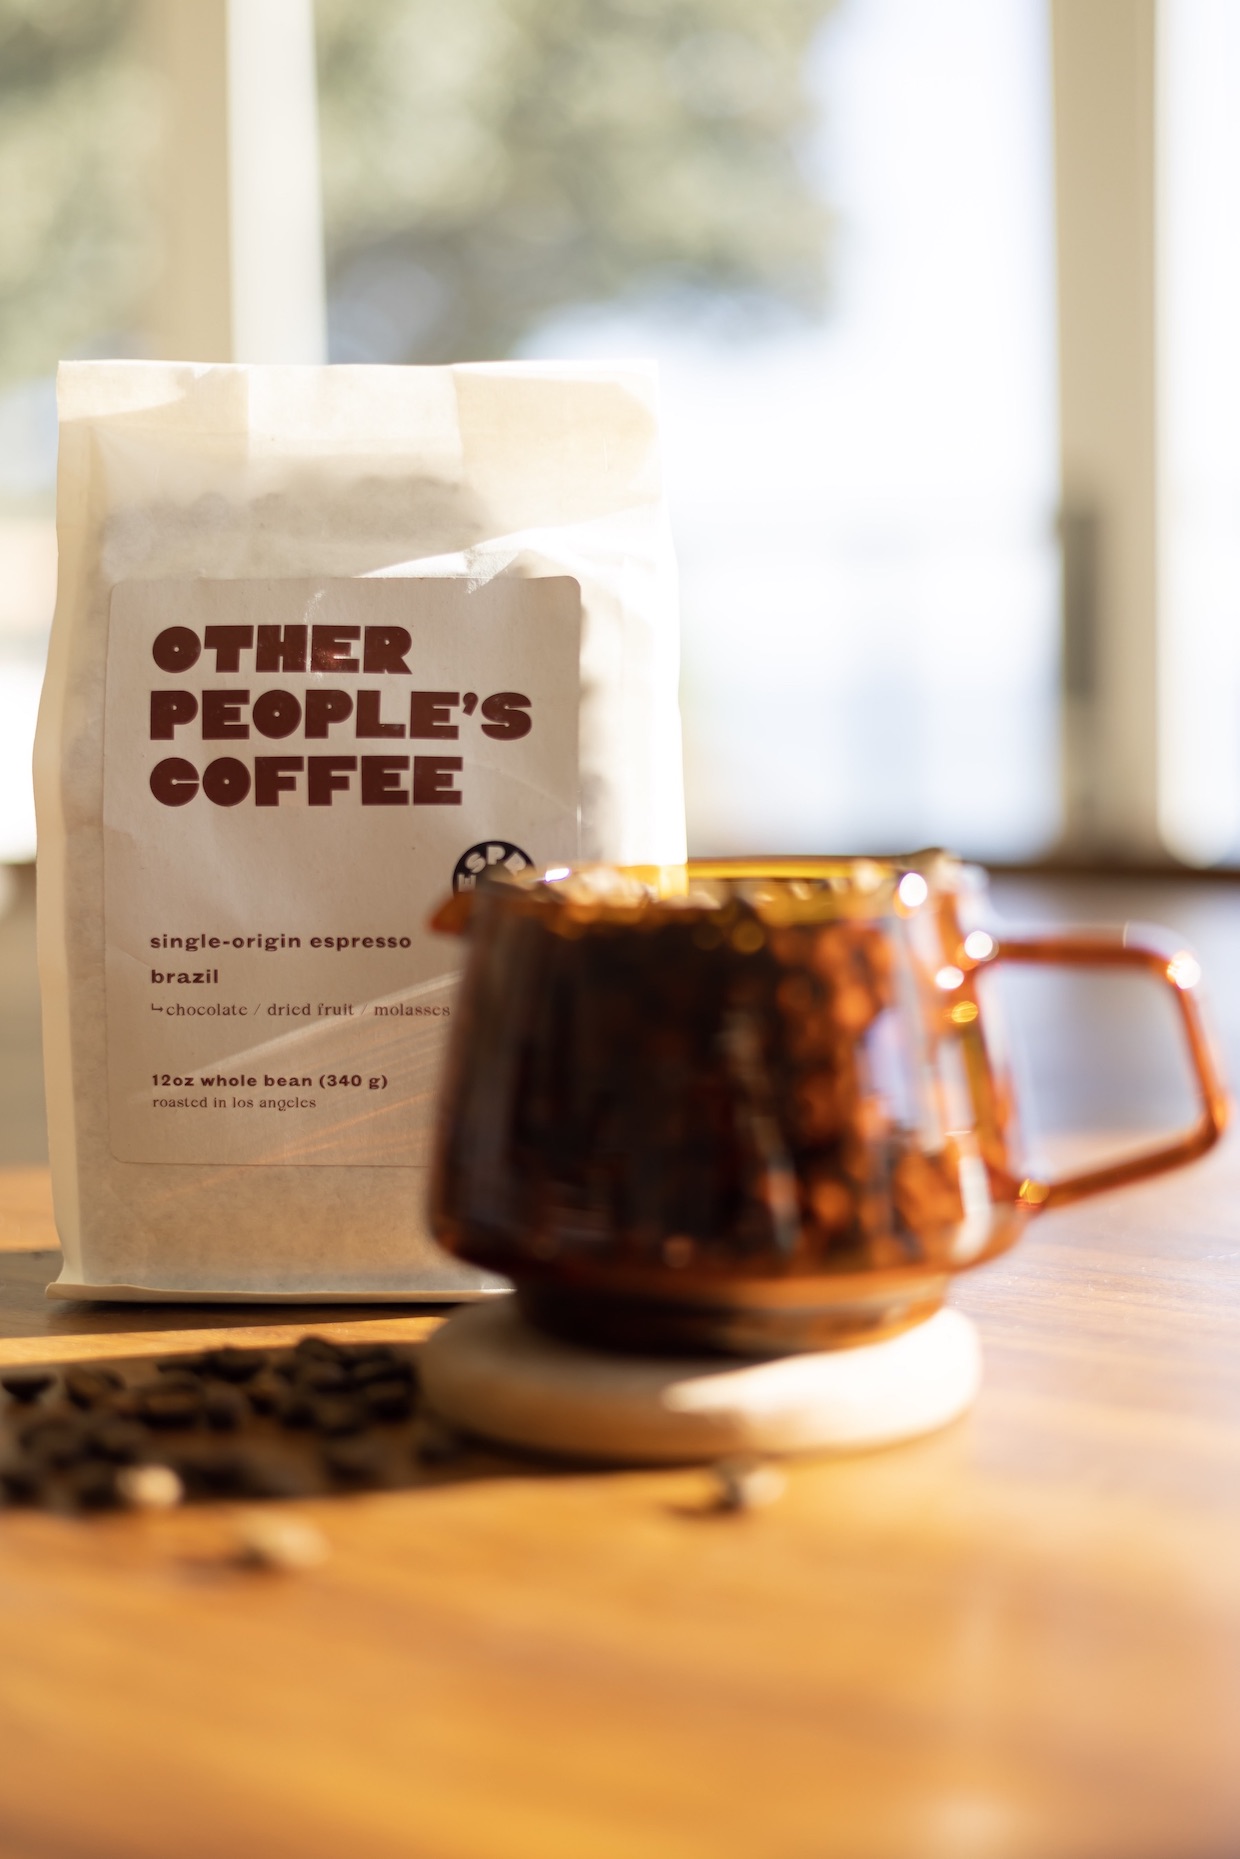 01_Single Origin Espresso_Other Peoples Coffee by Casetta_credit-Jordan Rose Designs